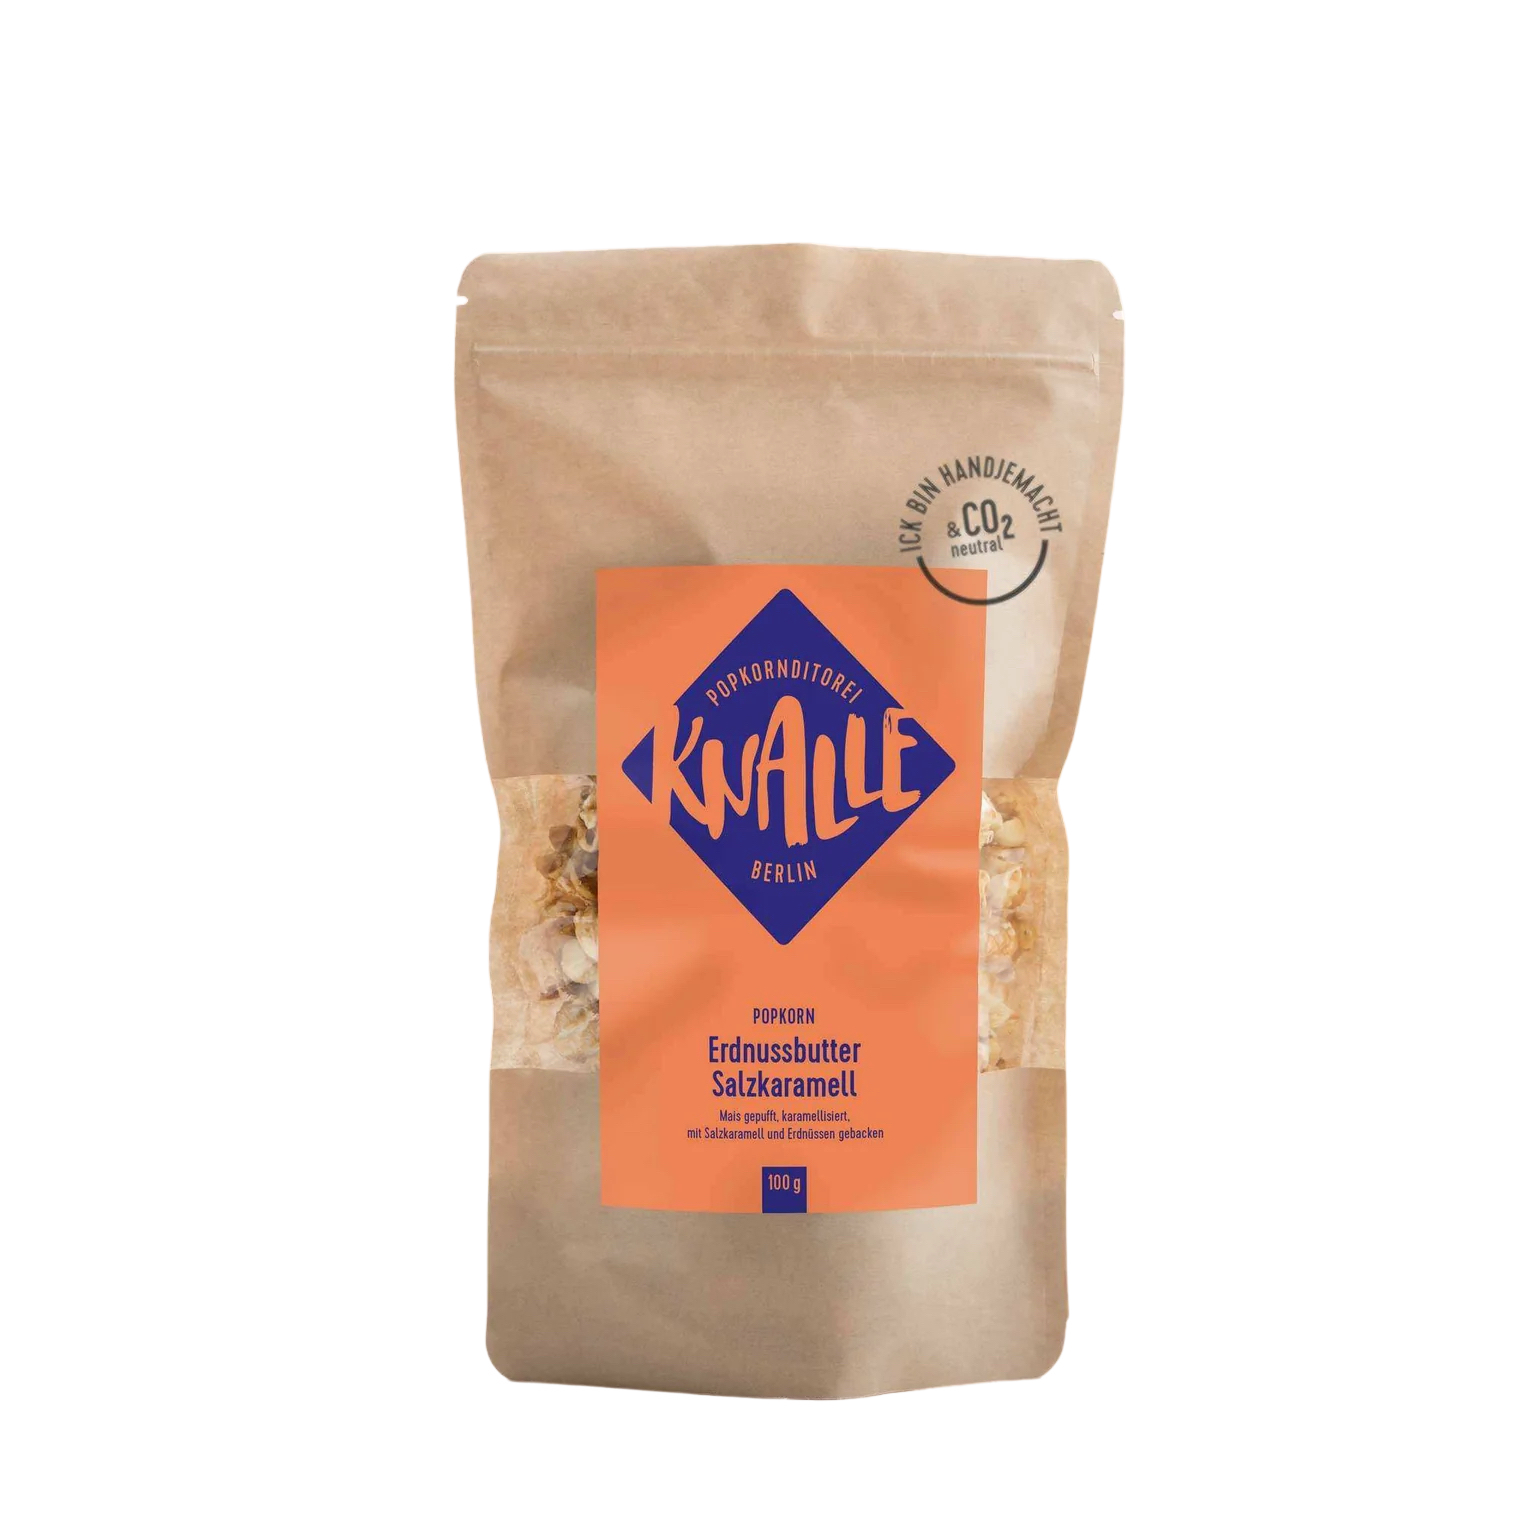 Popkorn | Erdnussbutter Salzkaramell | 100 g | Knalle